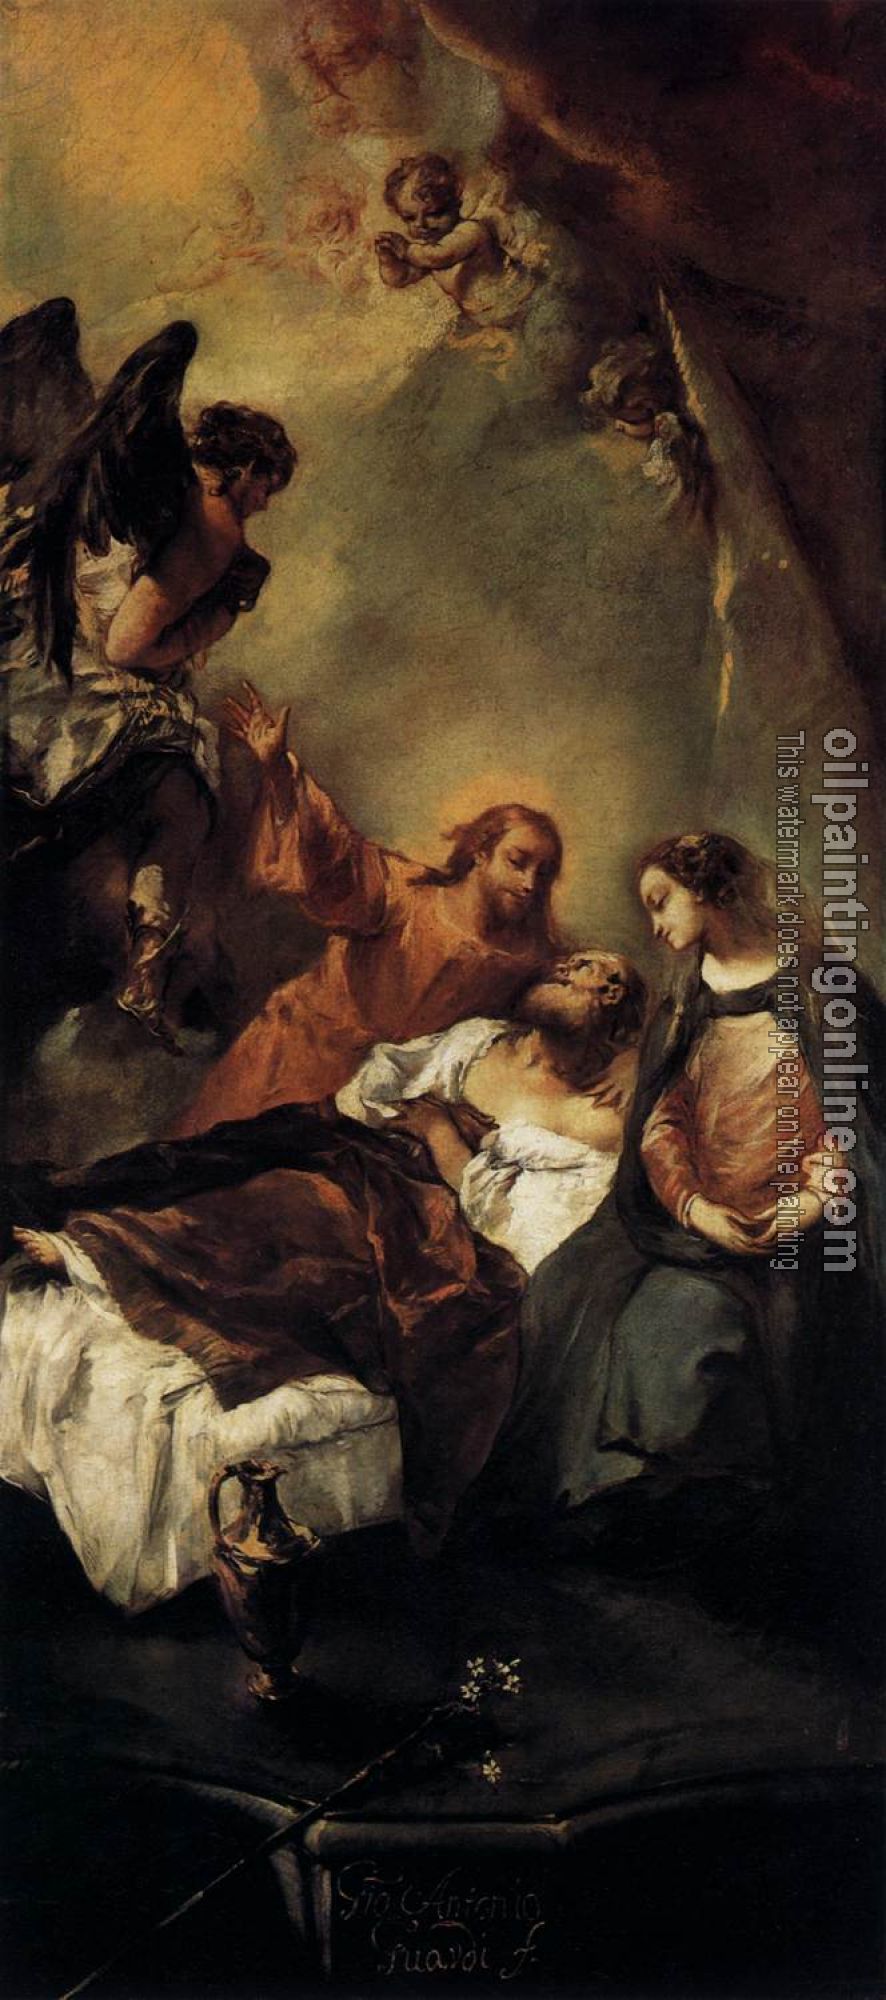 Guardi, Gianantonio - The Death of Joseph